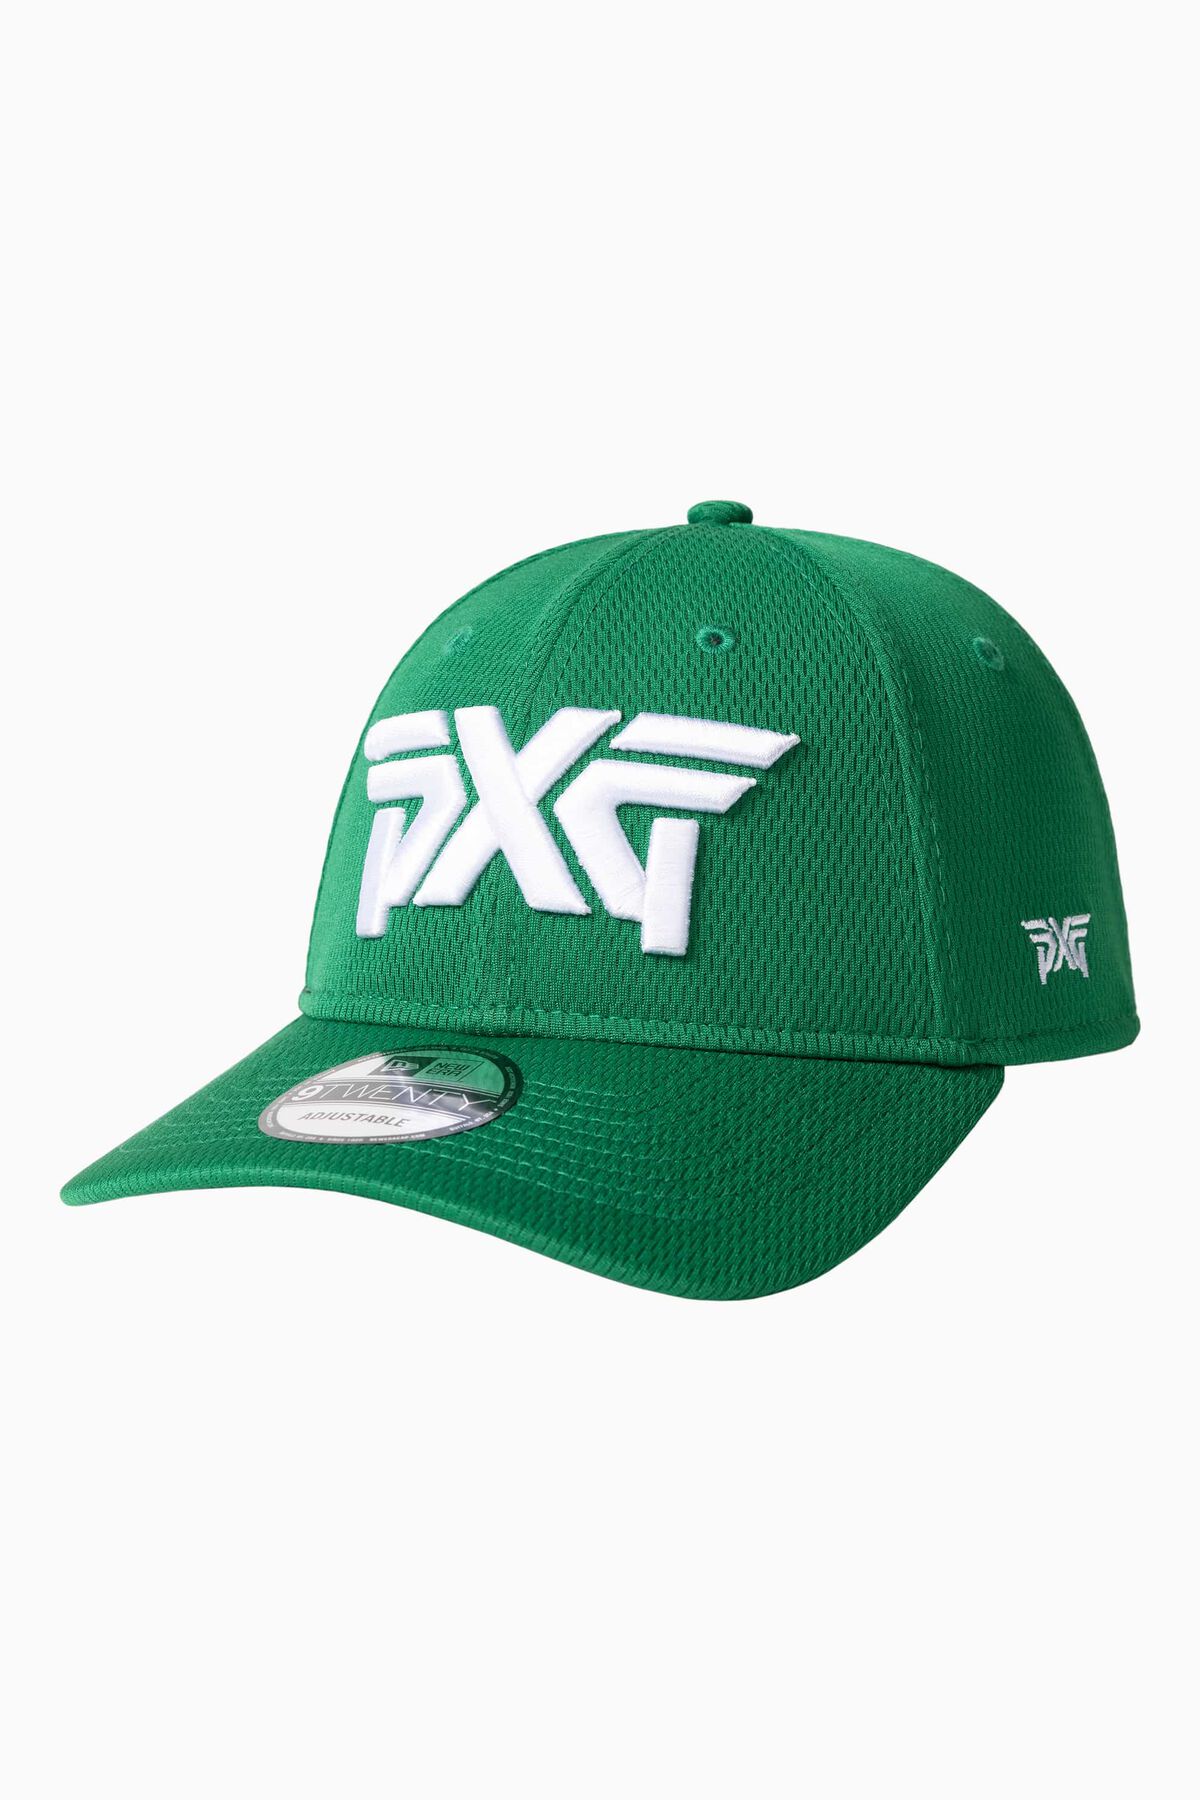 PXG Boston Green 9TWENTY Adjustable Cap 